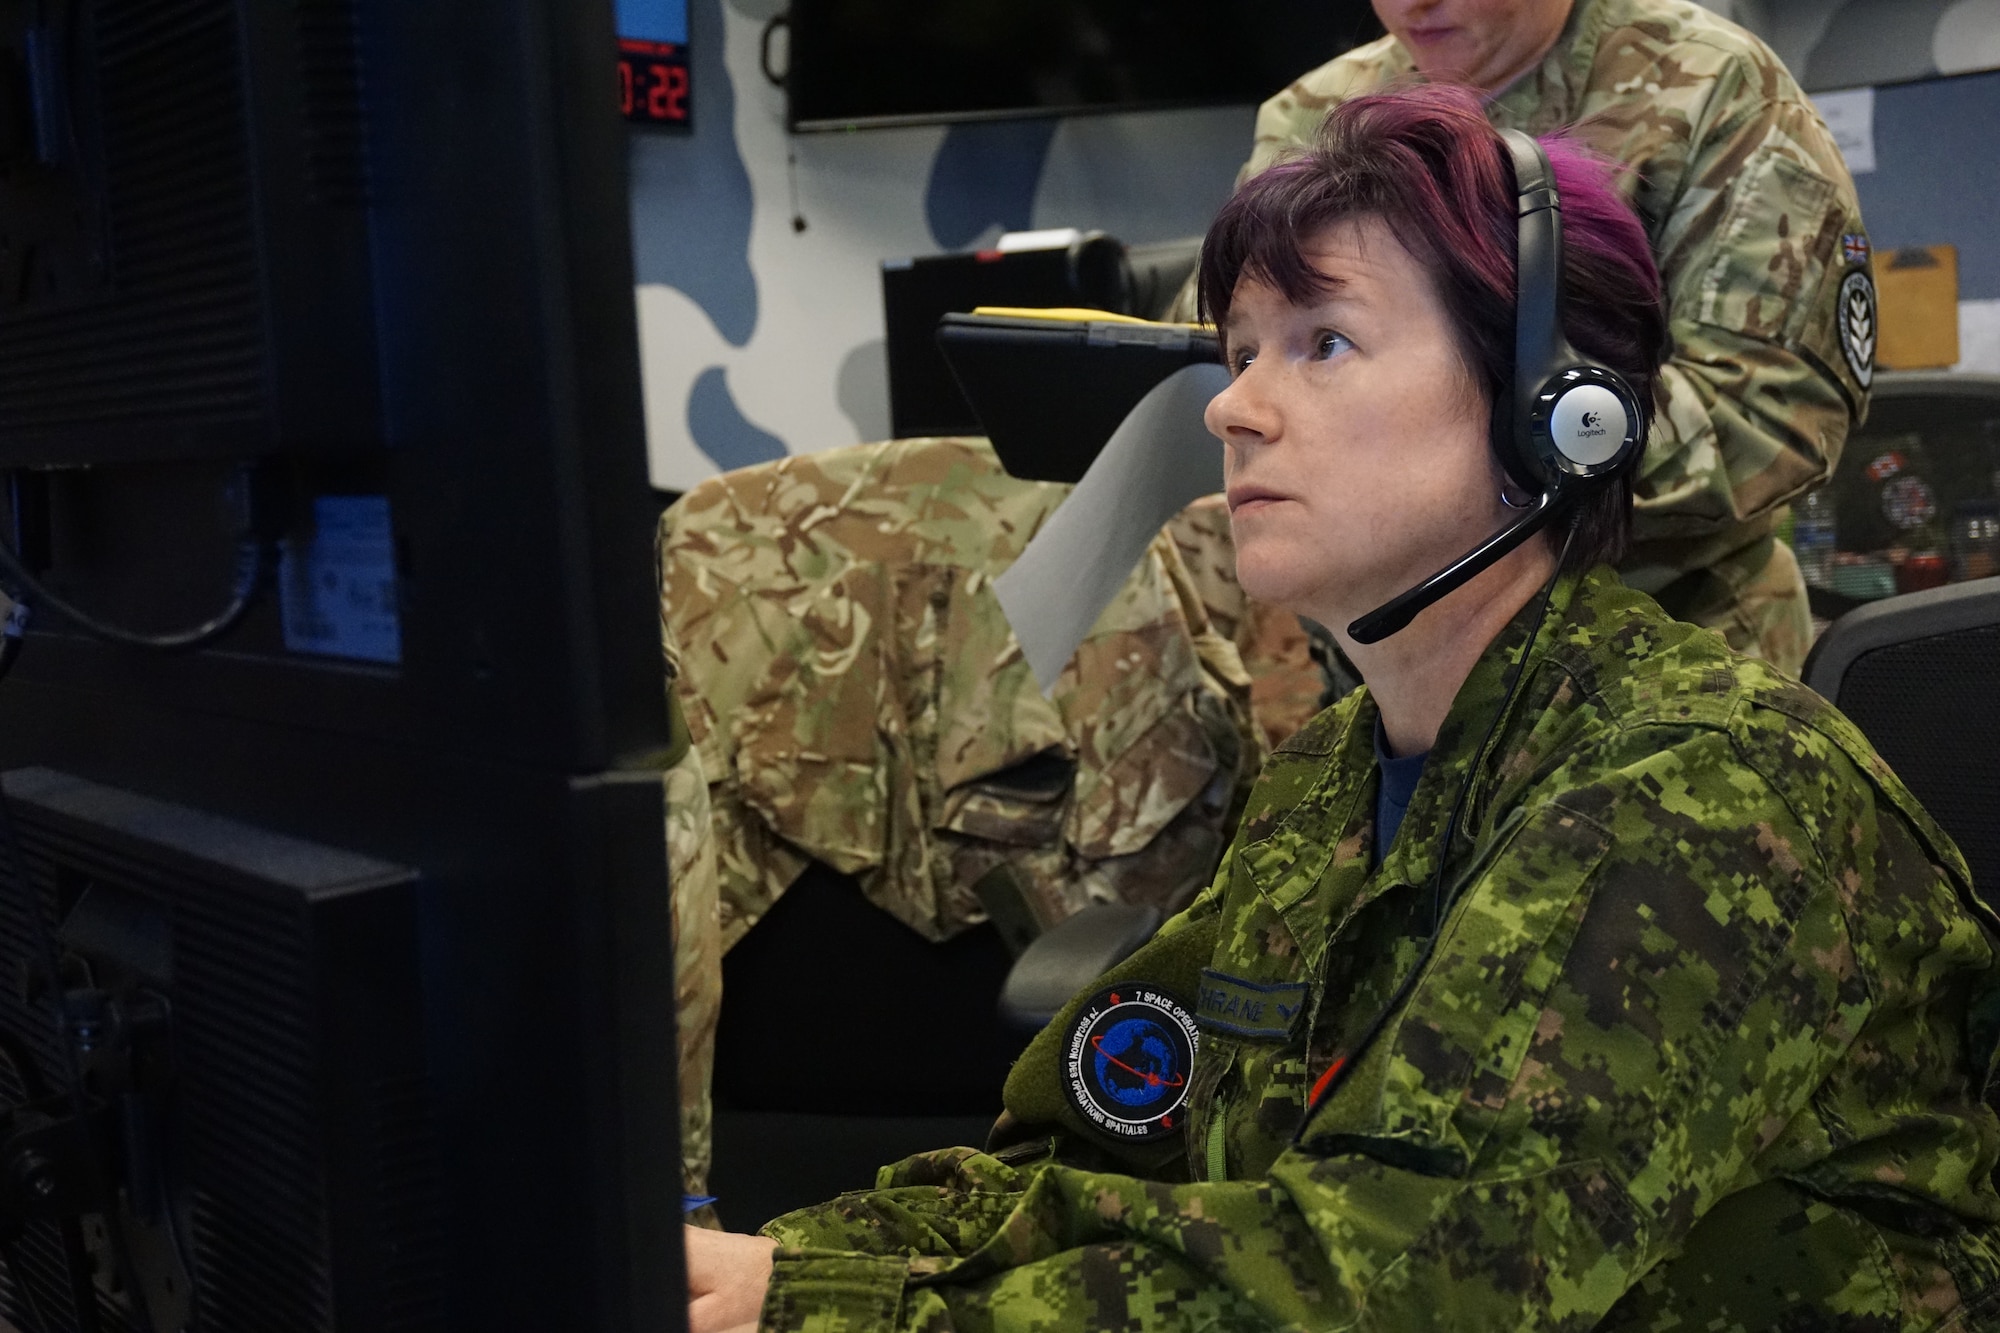 uniformed military members working  computers